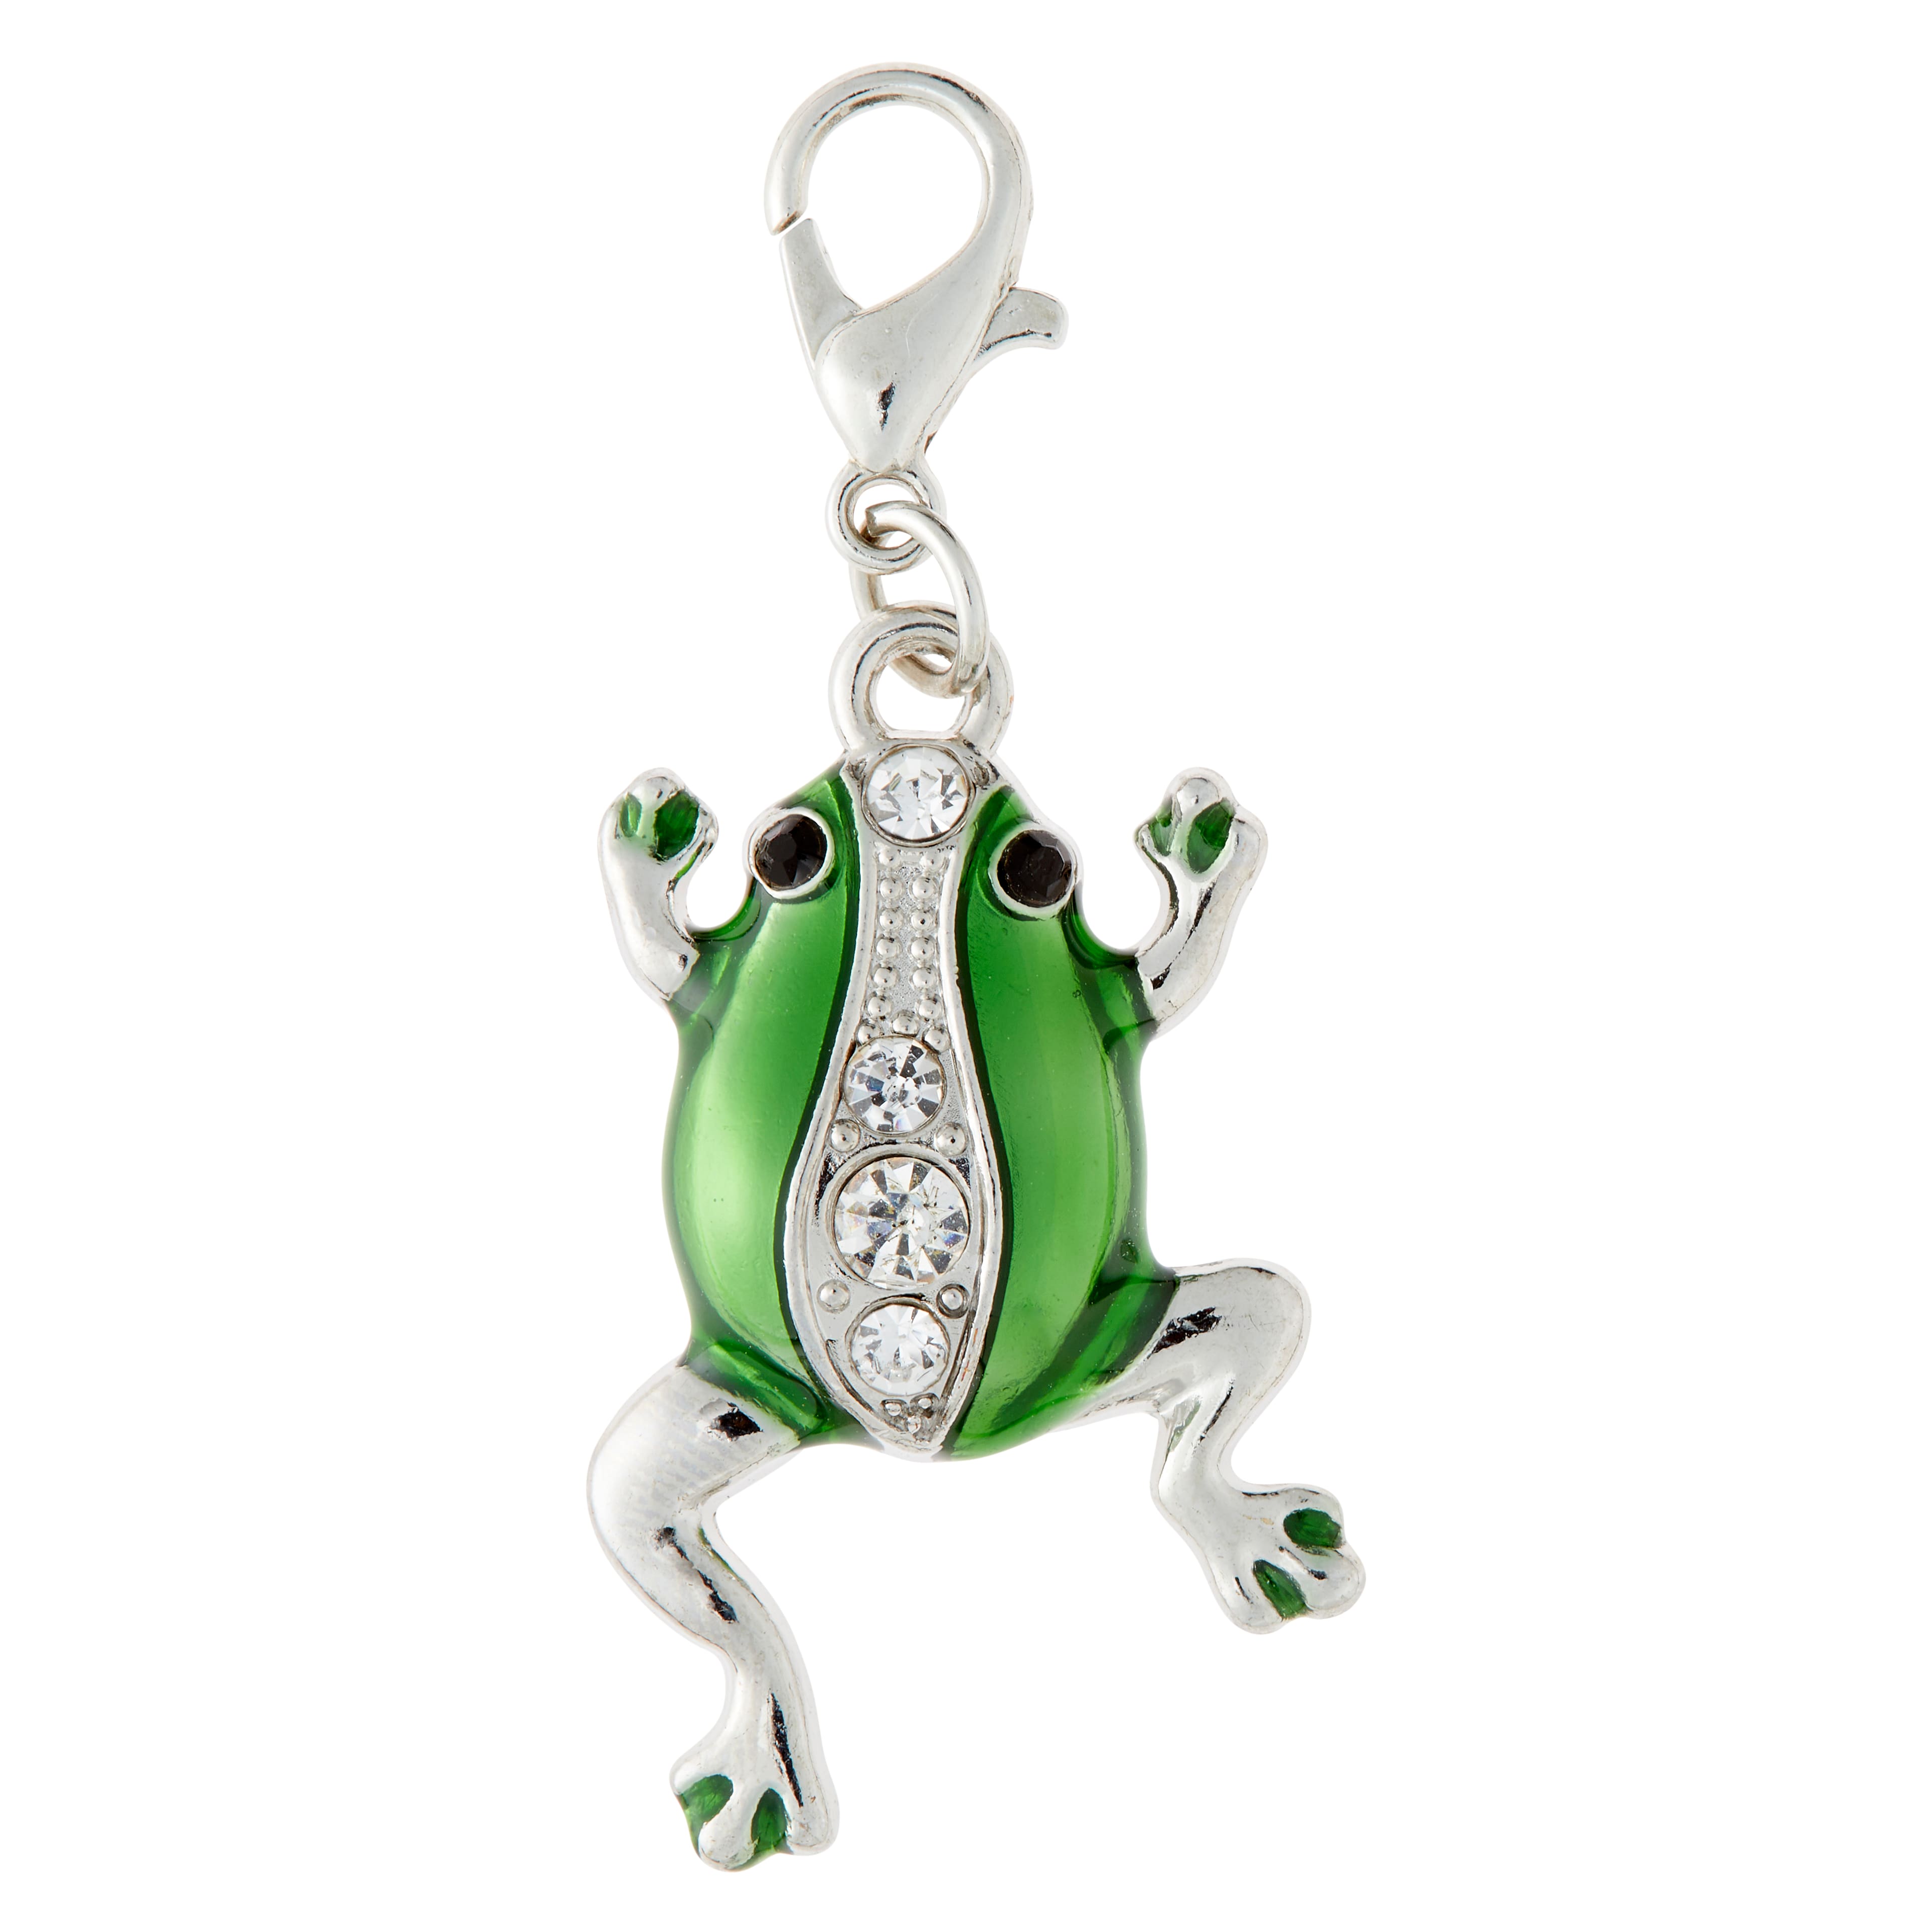 Charmalong&#x2122; Frog Novelty Charm By Bead Landing&#x2122;